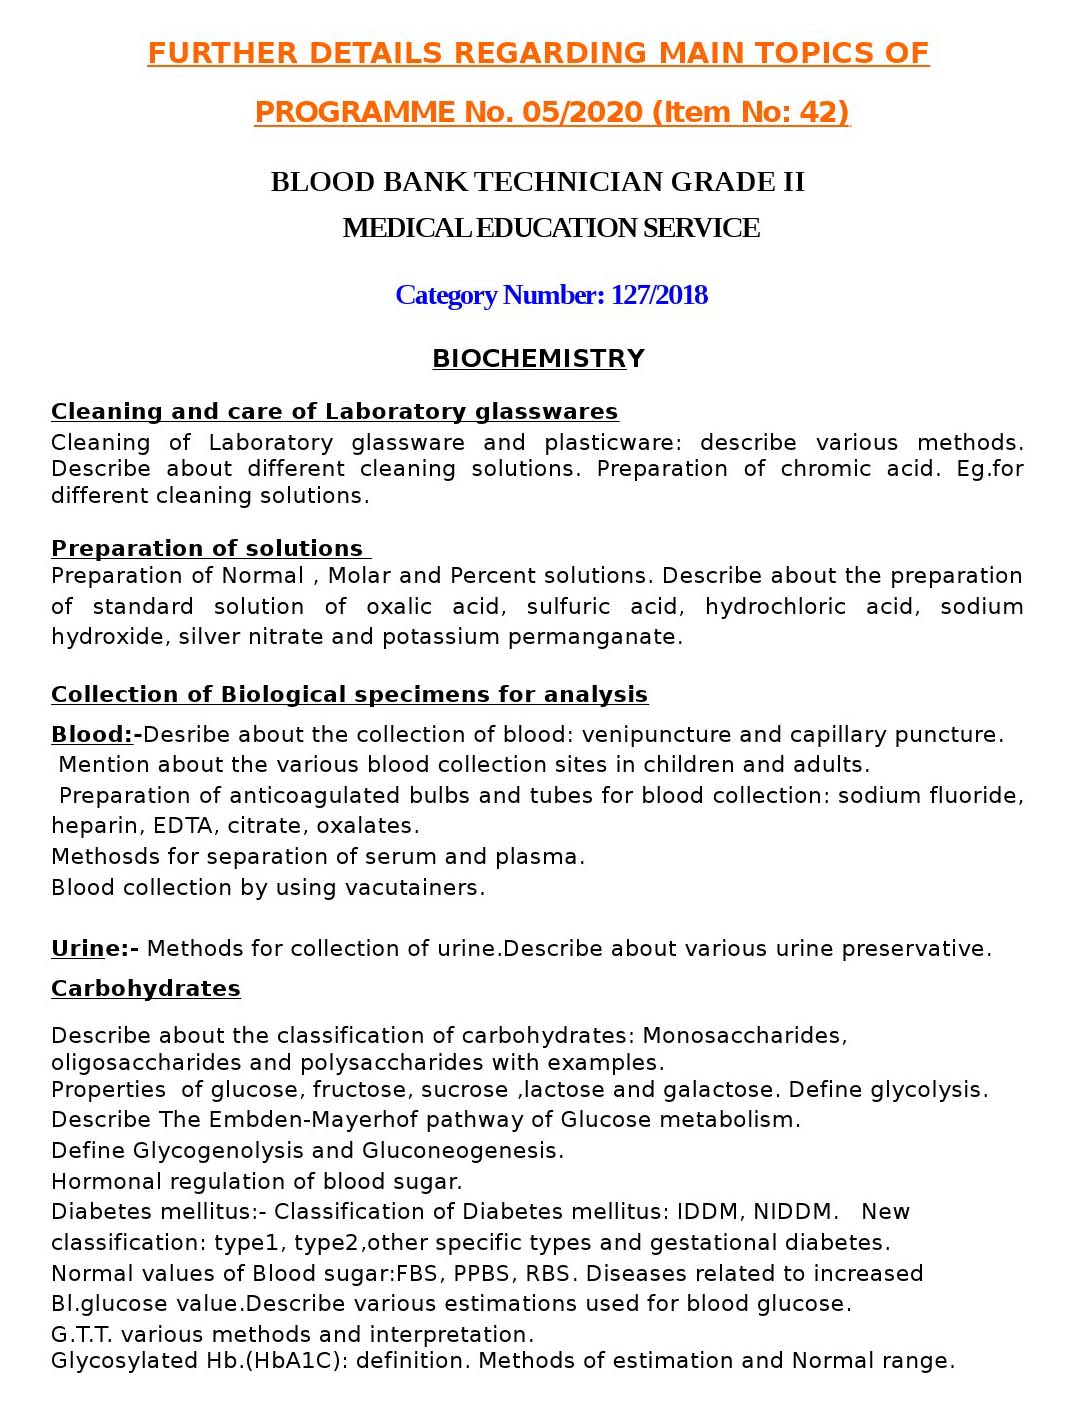 Blood Bank Technician Grade II Exam Syllabus May 2020 - Notification Image 1